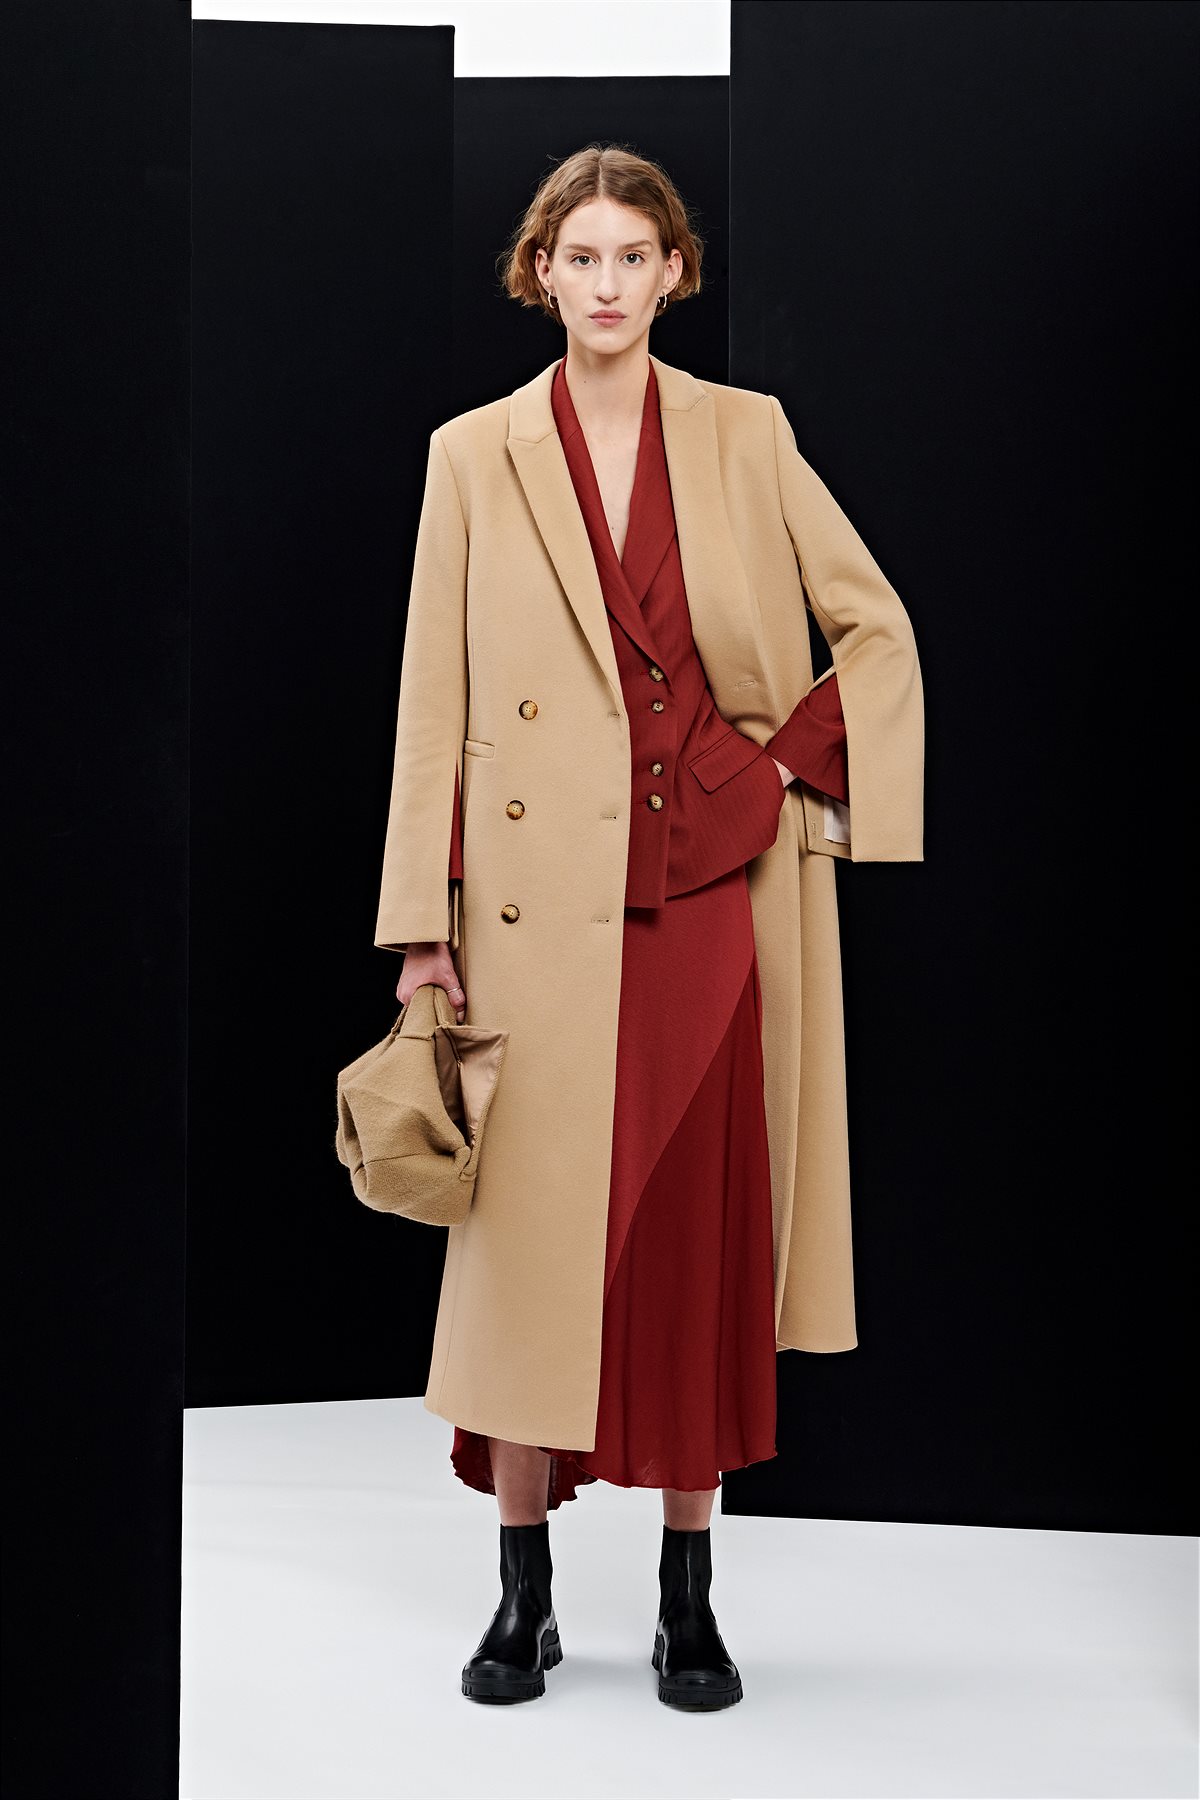 COEL cashmere wool coat, JONAH1 double-breasted jacket,  SAVINA  asymmetric skirt